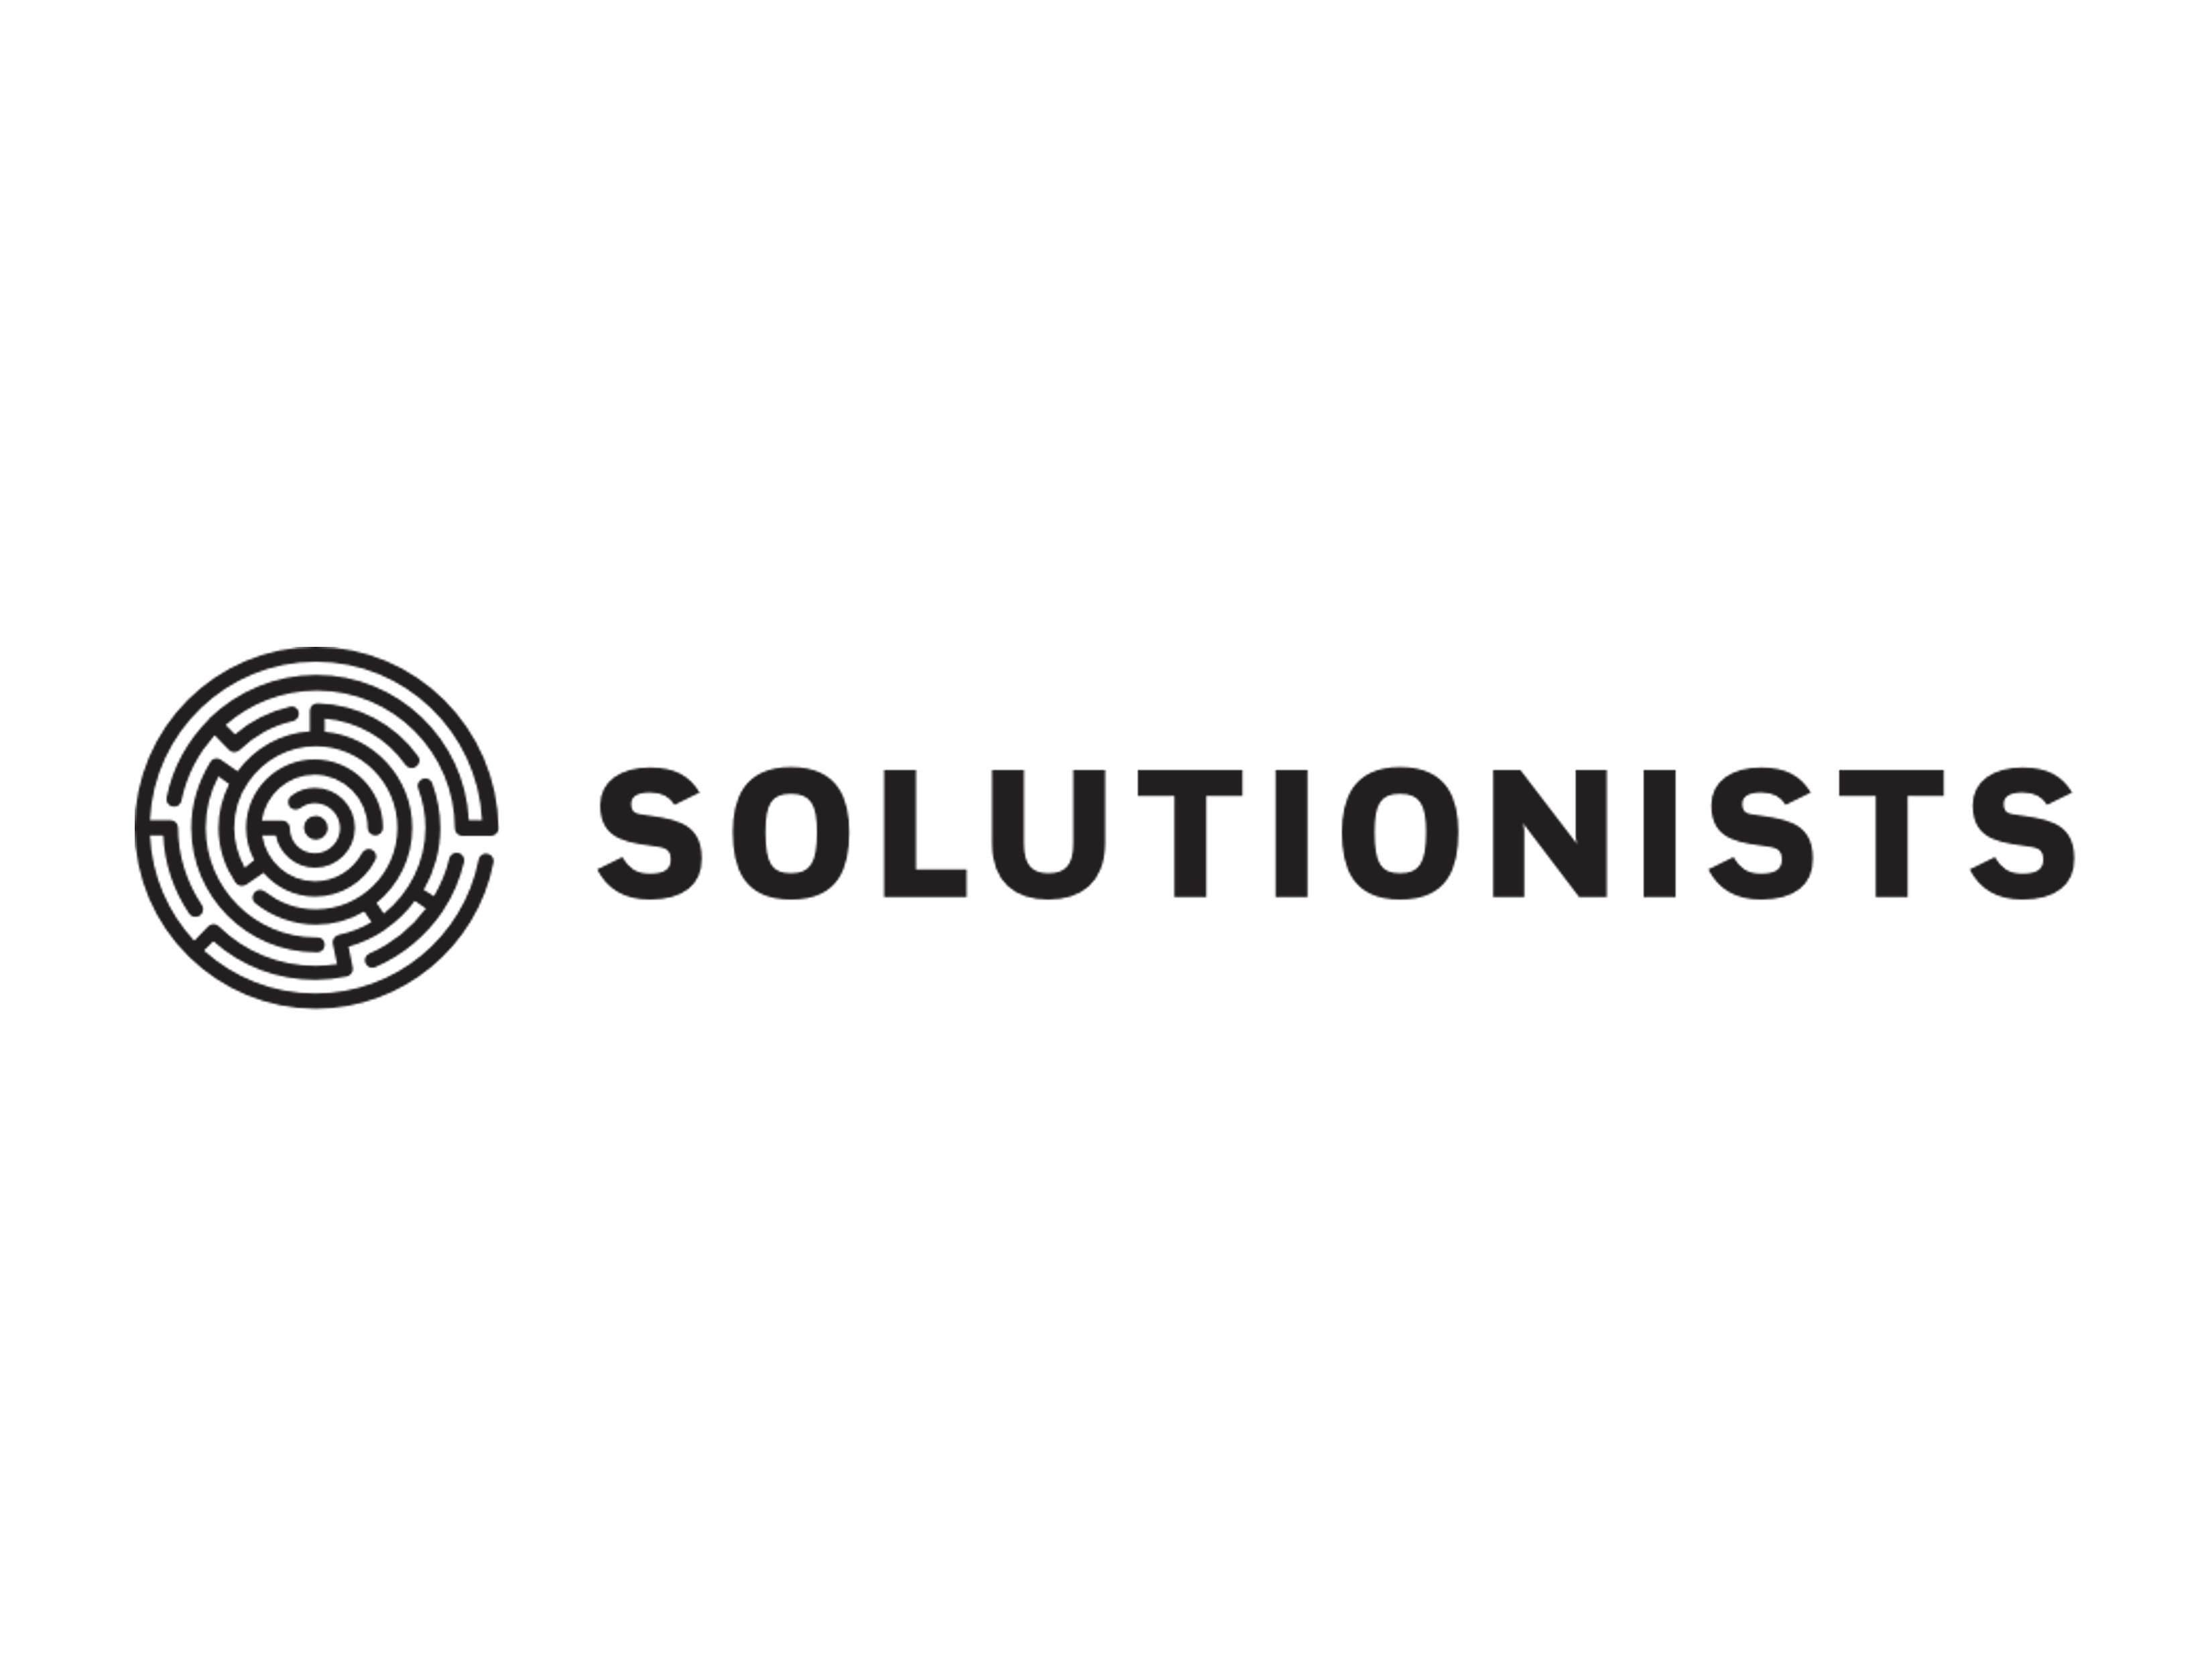 Solutionists logo